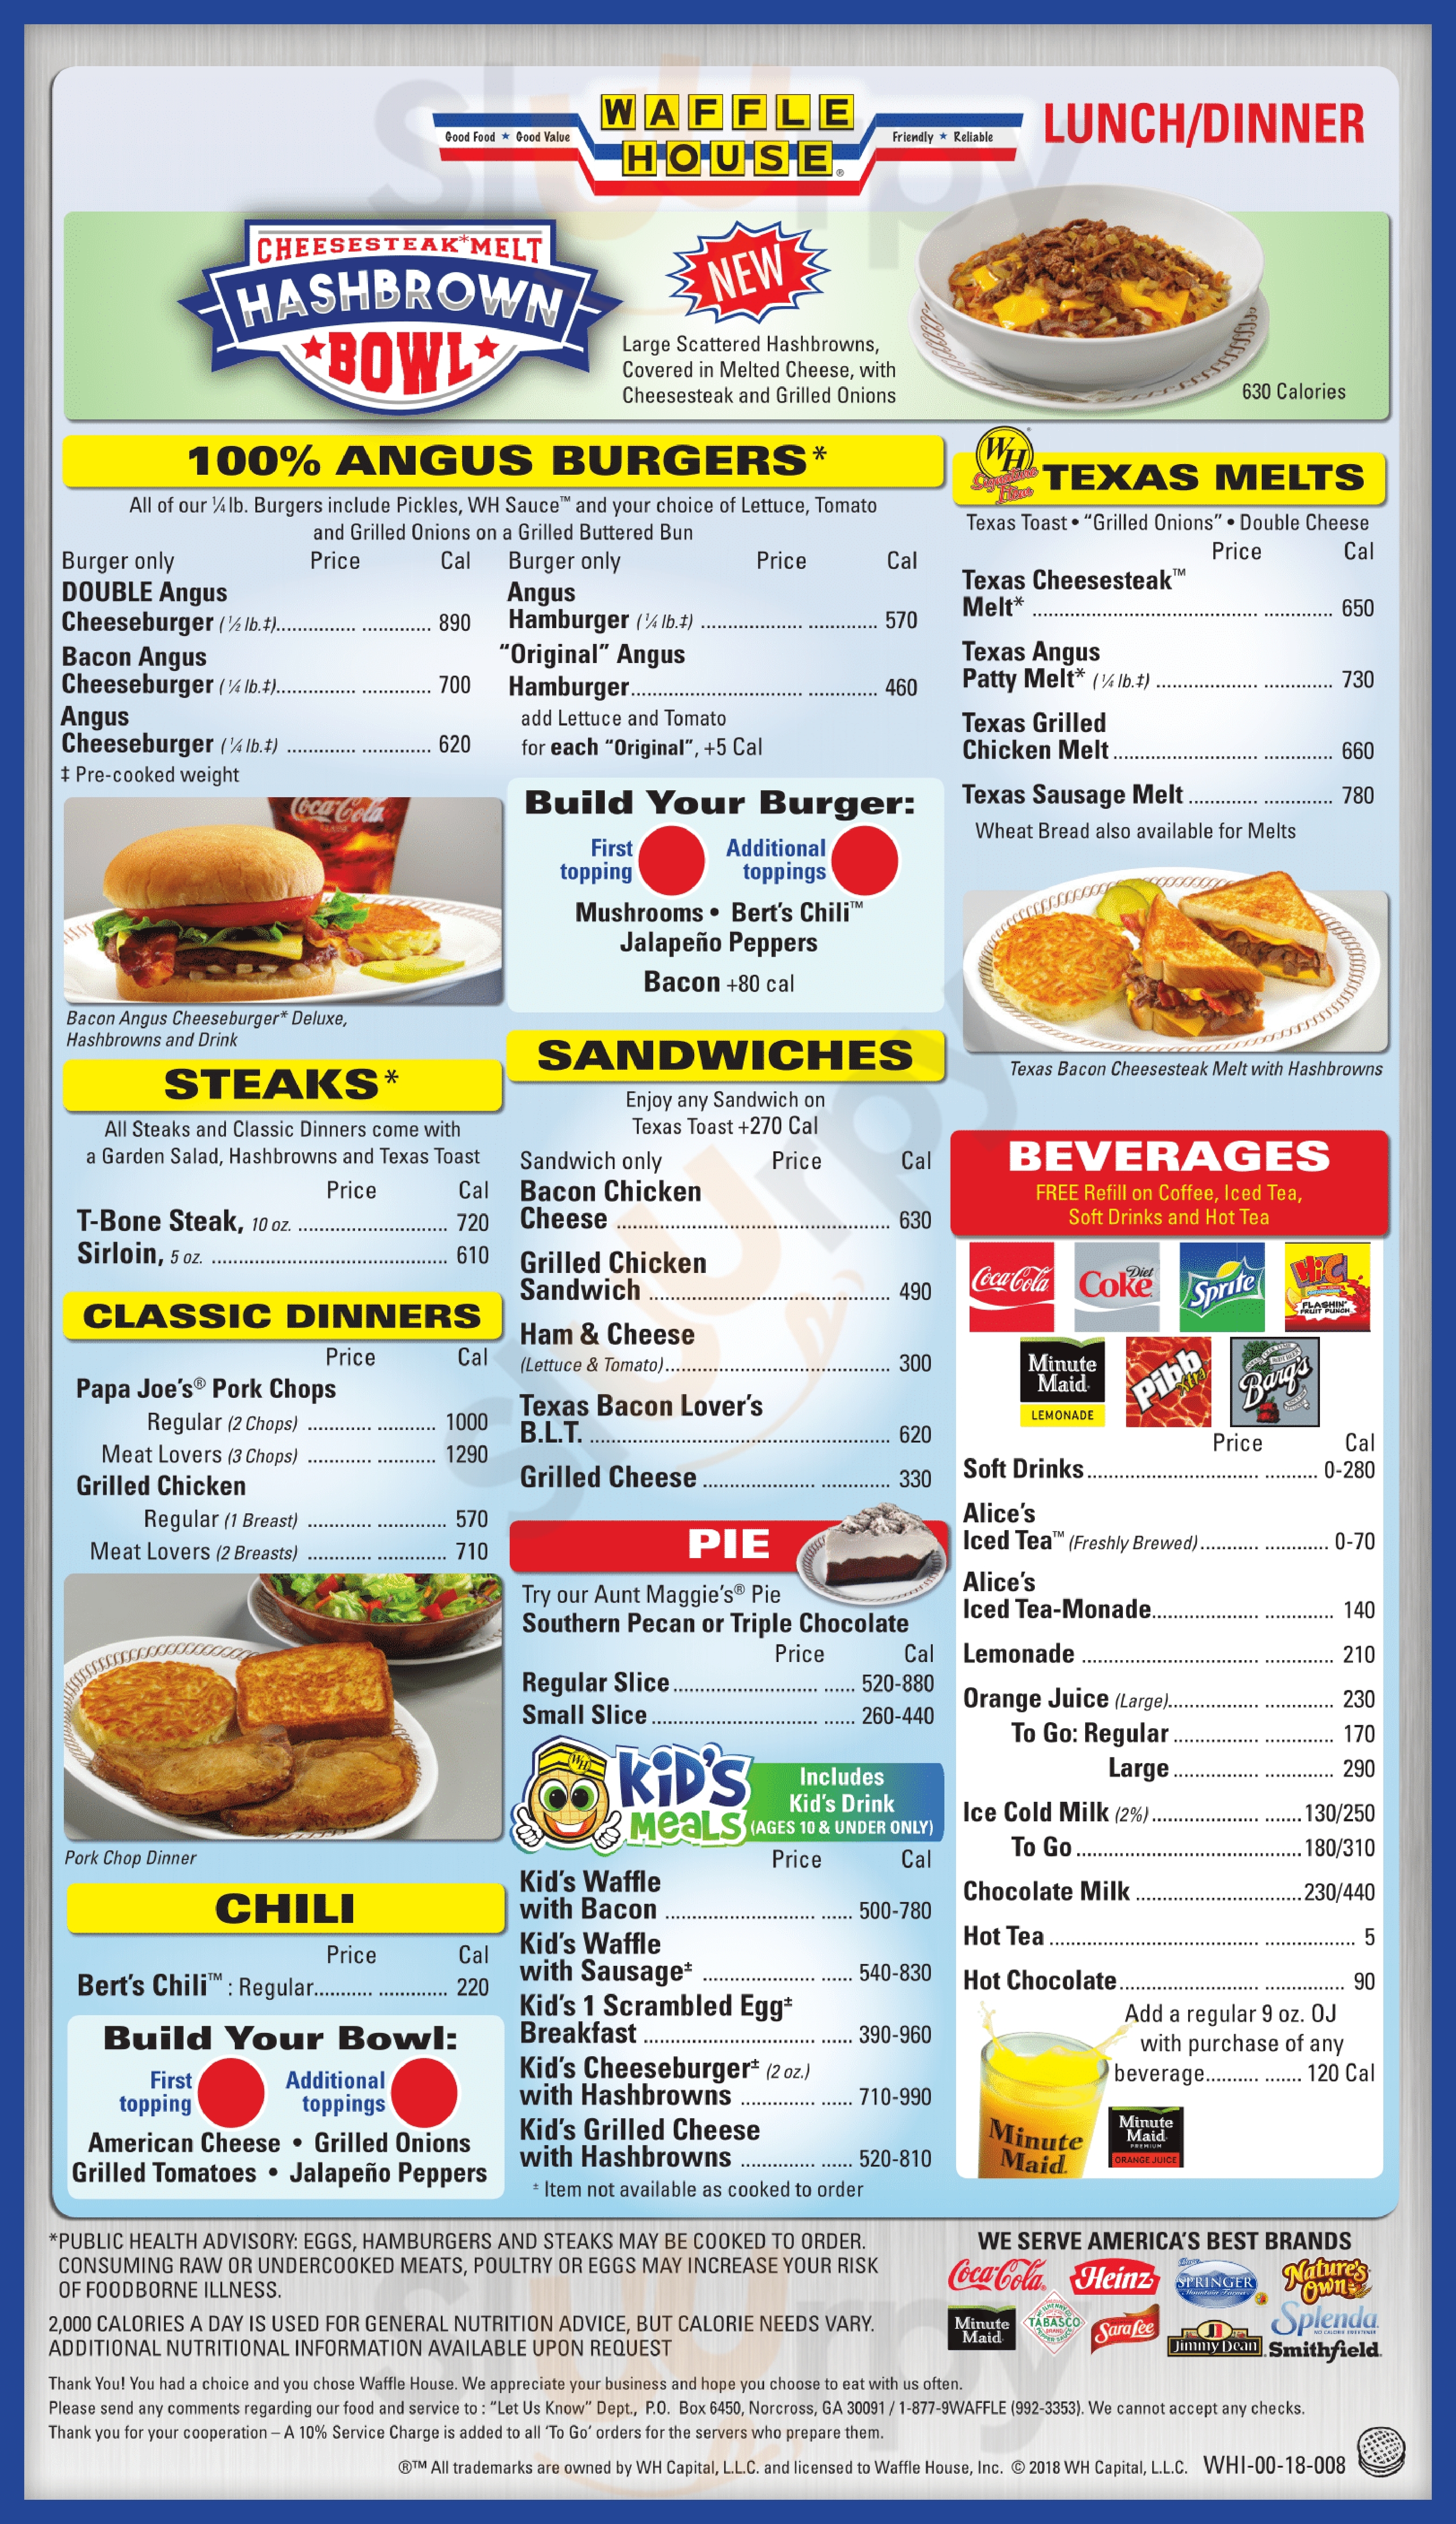 Waffle House Fort Lauderdale Menu - 1